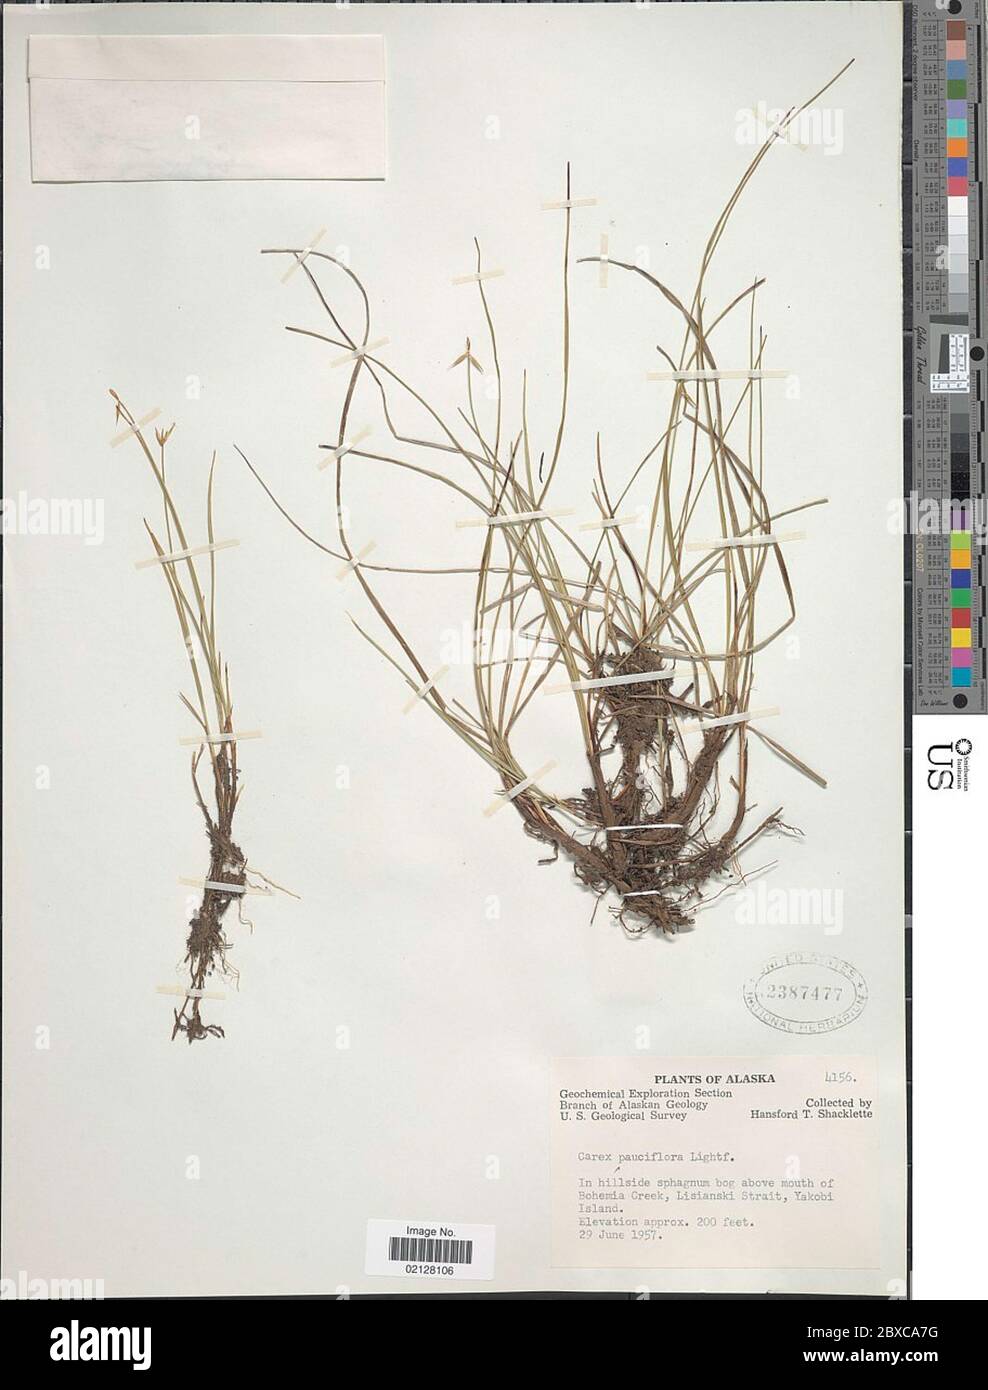 Carex pauciflora Carex pauciflora. Stock Photo